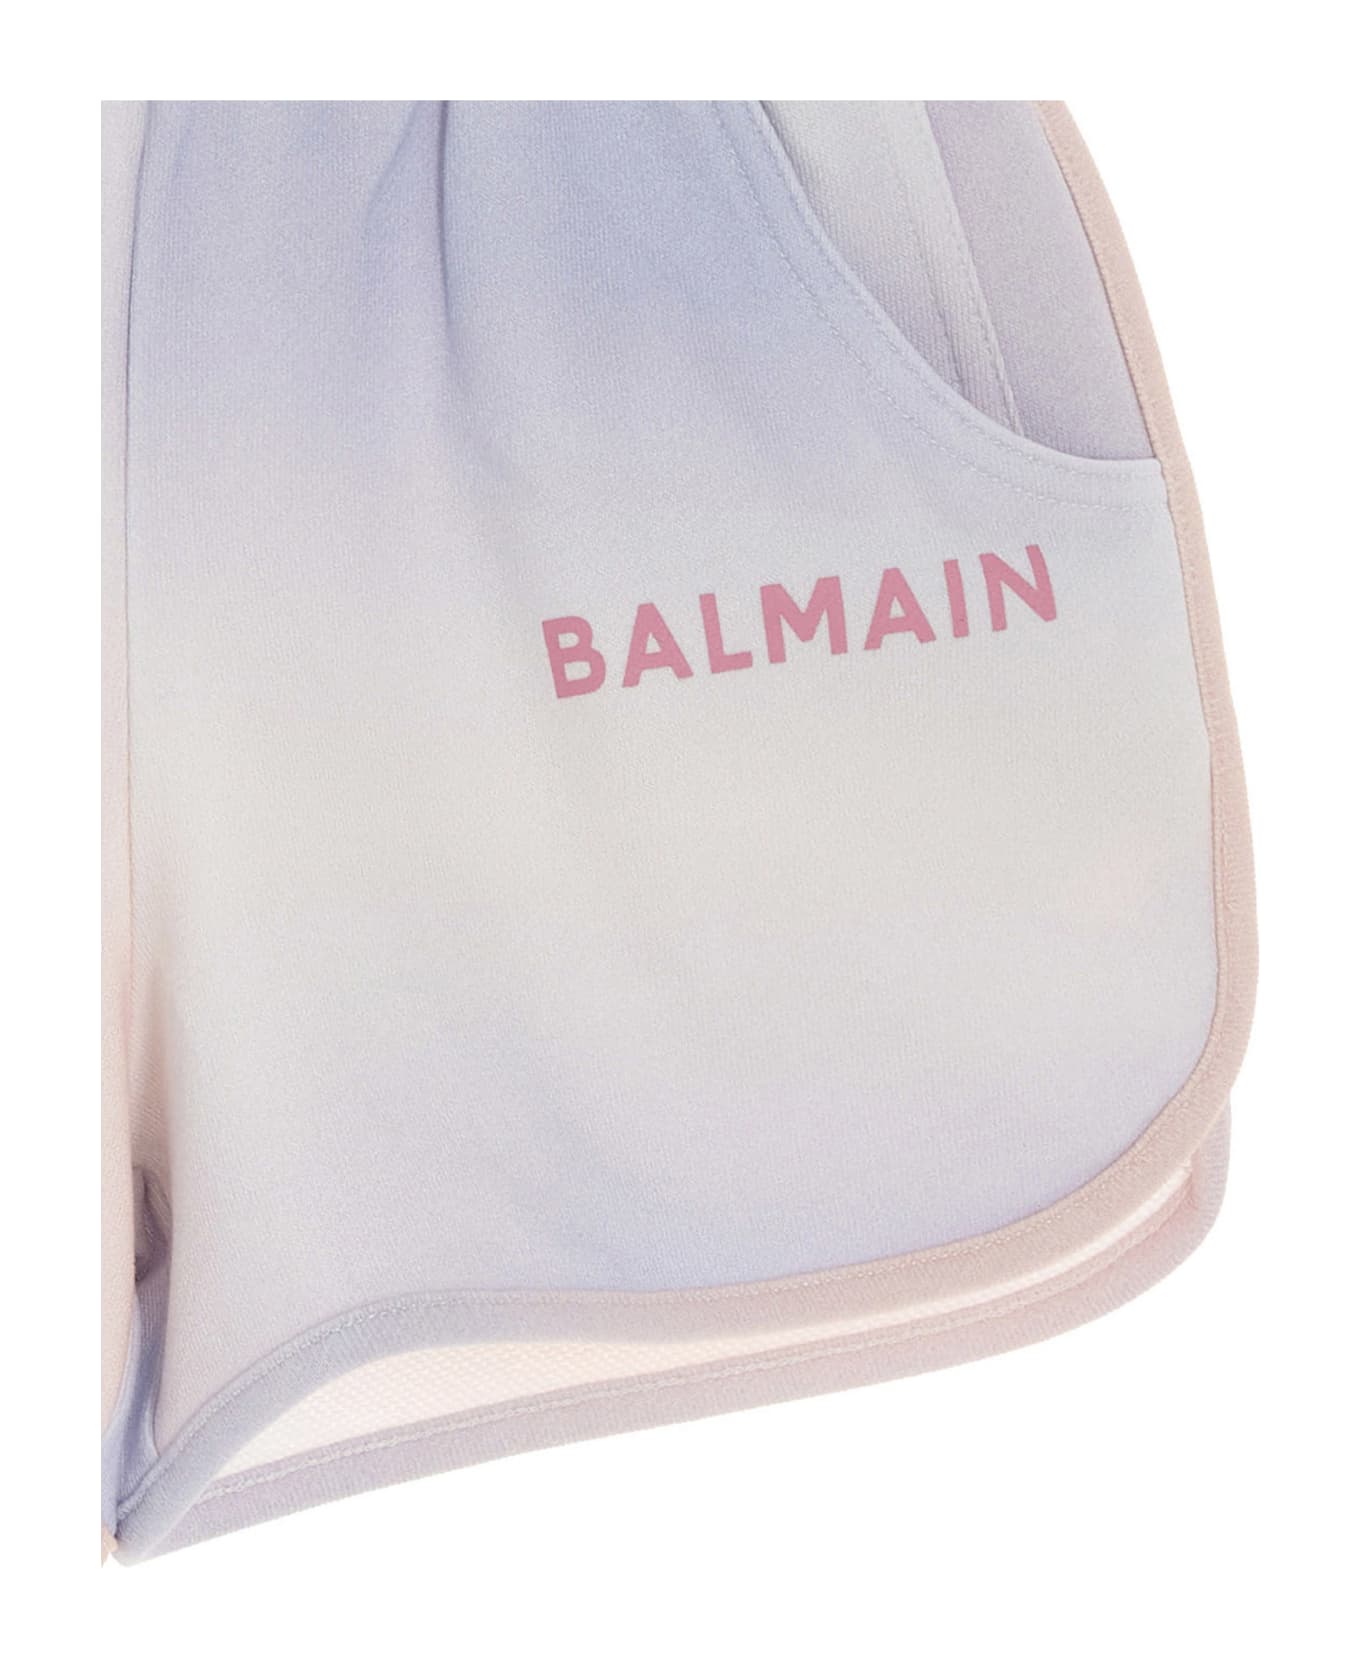 Balmain Logo Print Shorts - Multicolor ボトムス